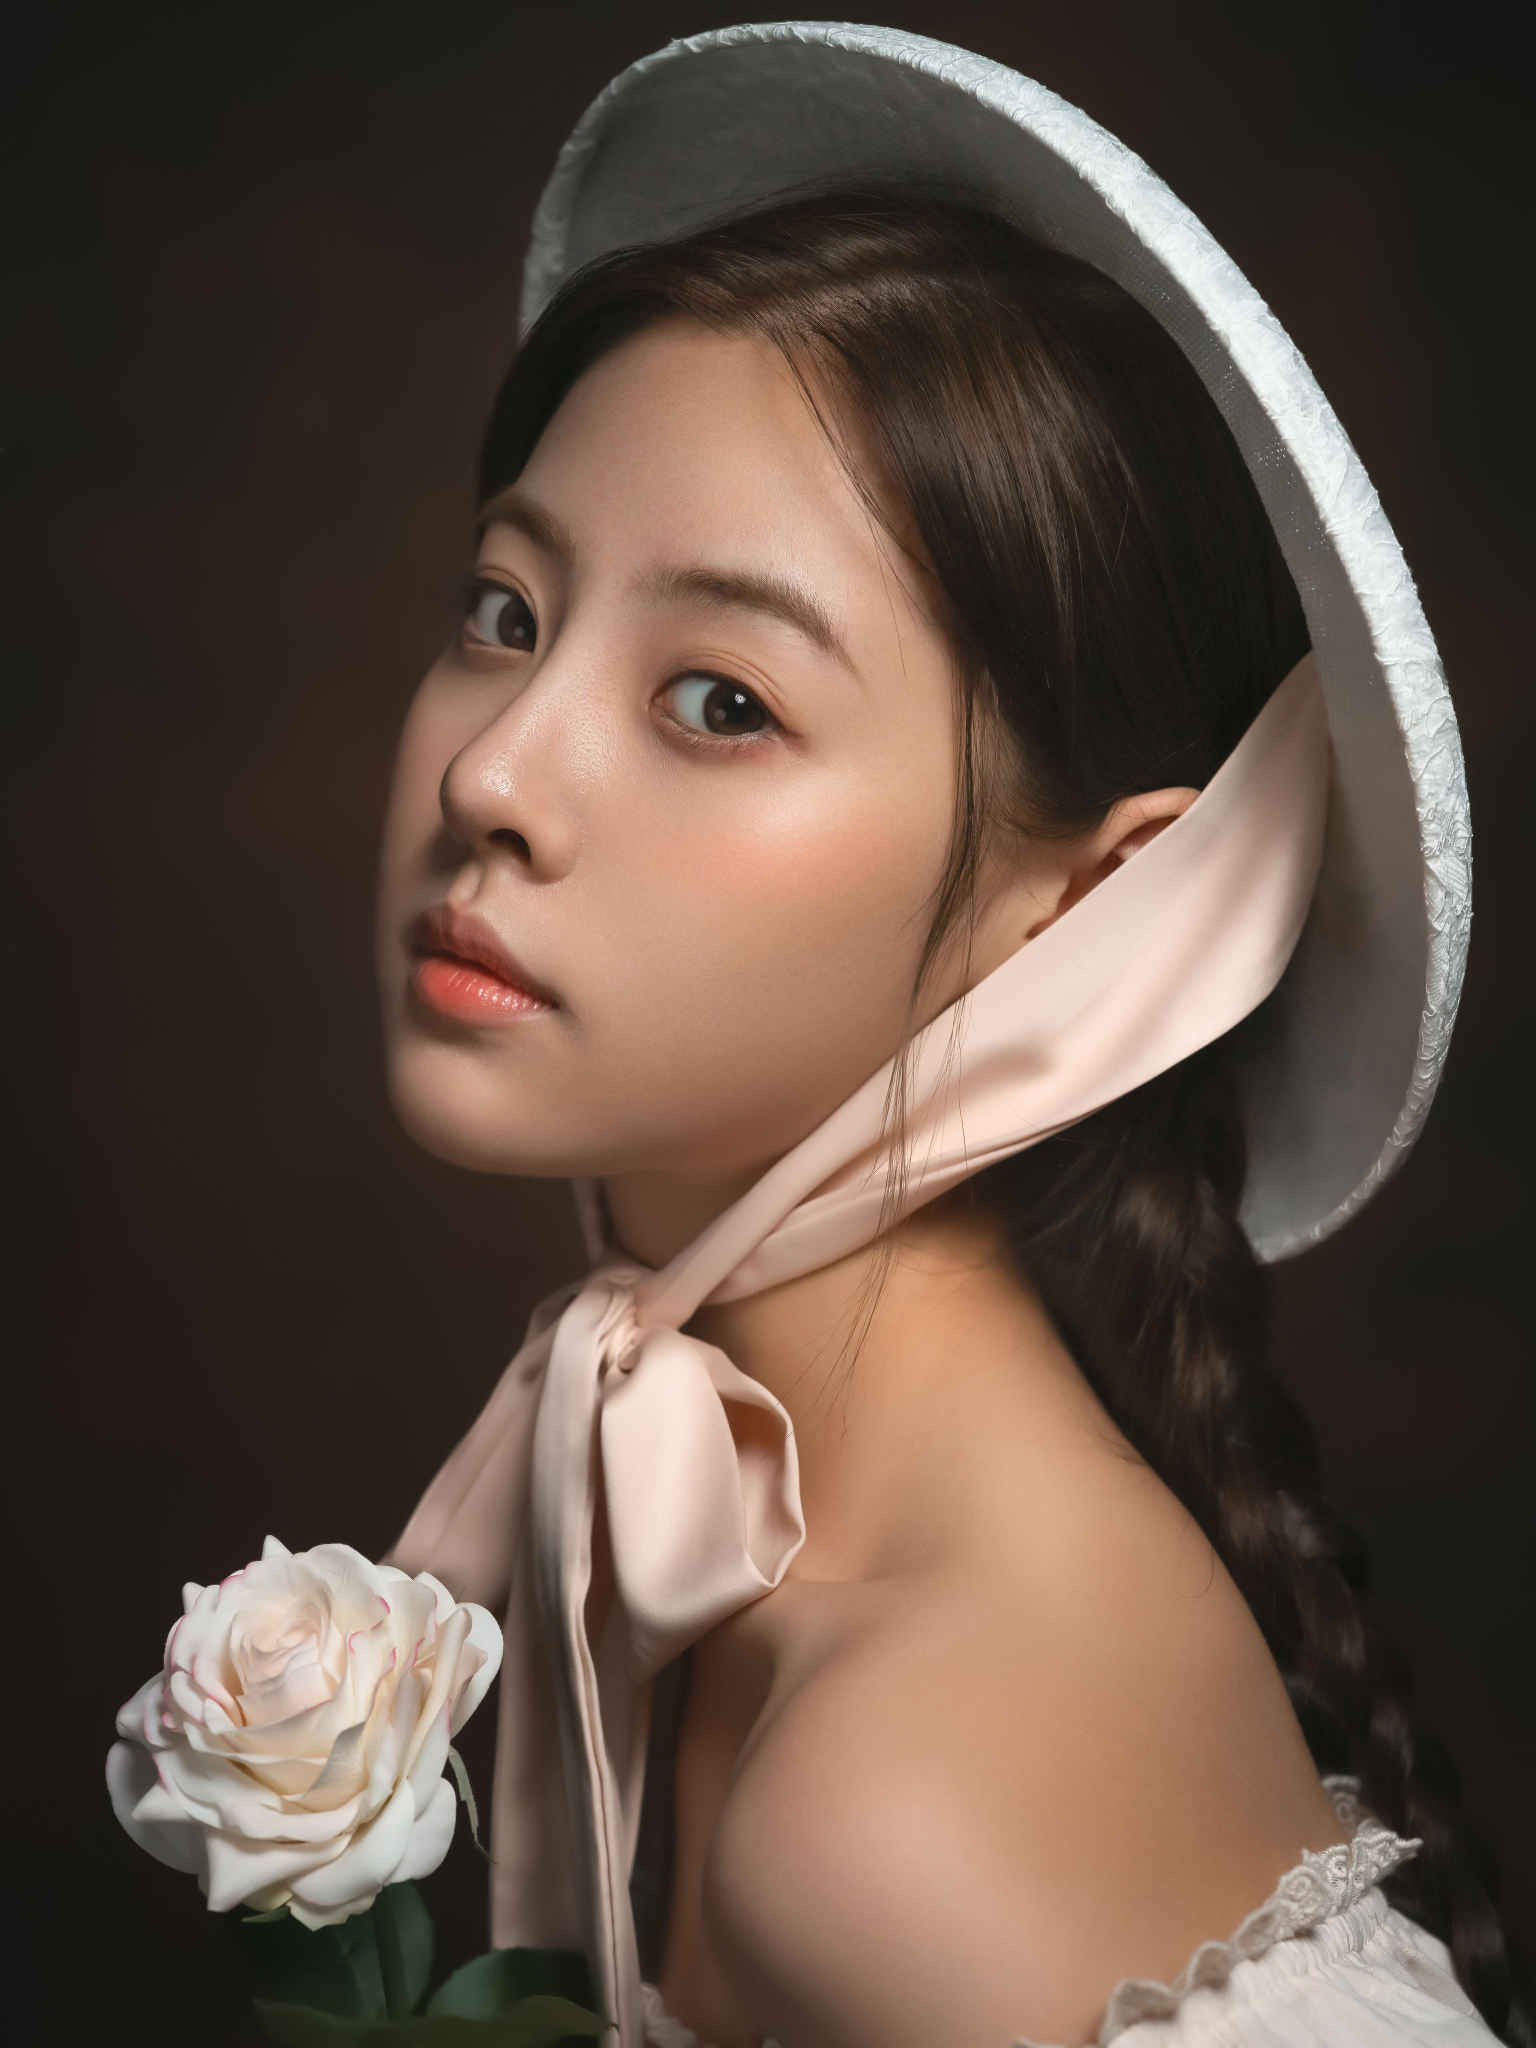 Lee Hu Women Brunette Looking At Viewer Hat Ribbon Asian Braids Flowers Rose Bare Shoulders Portrait 1536x2048